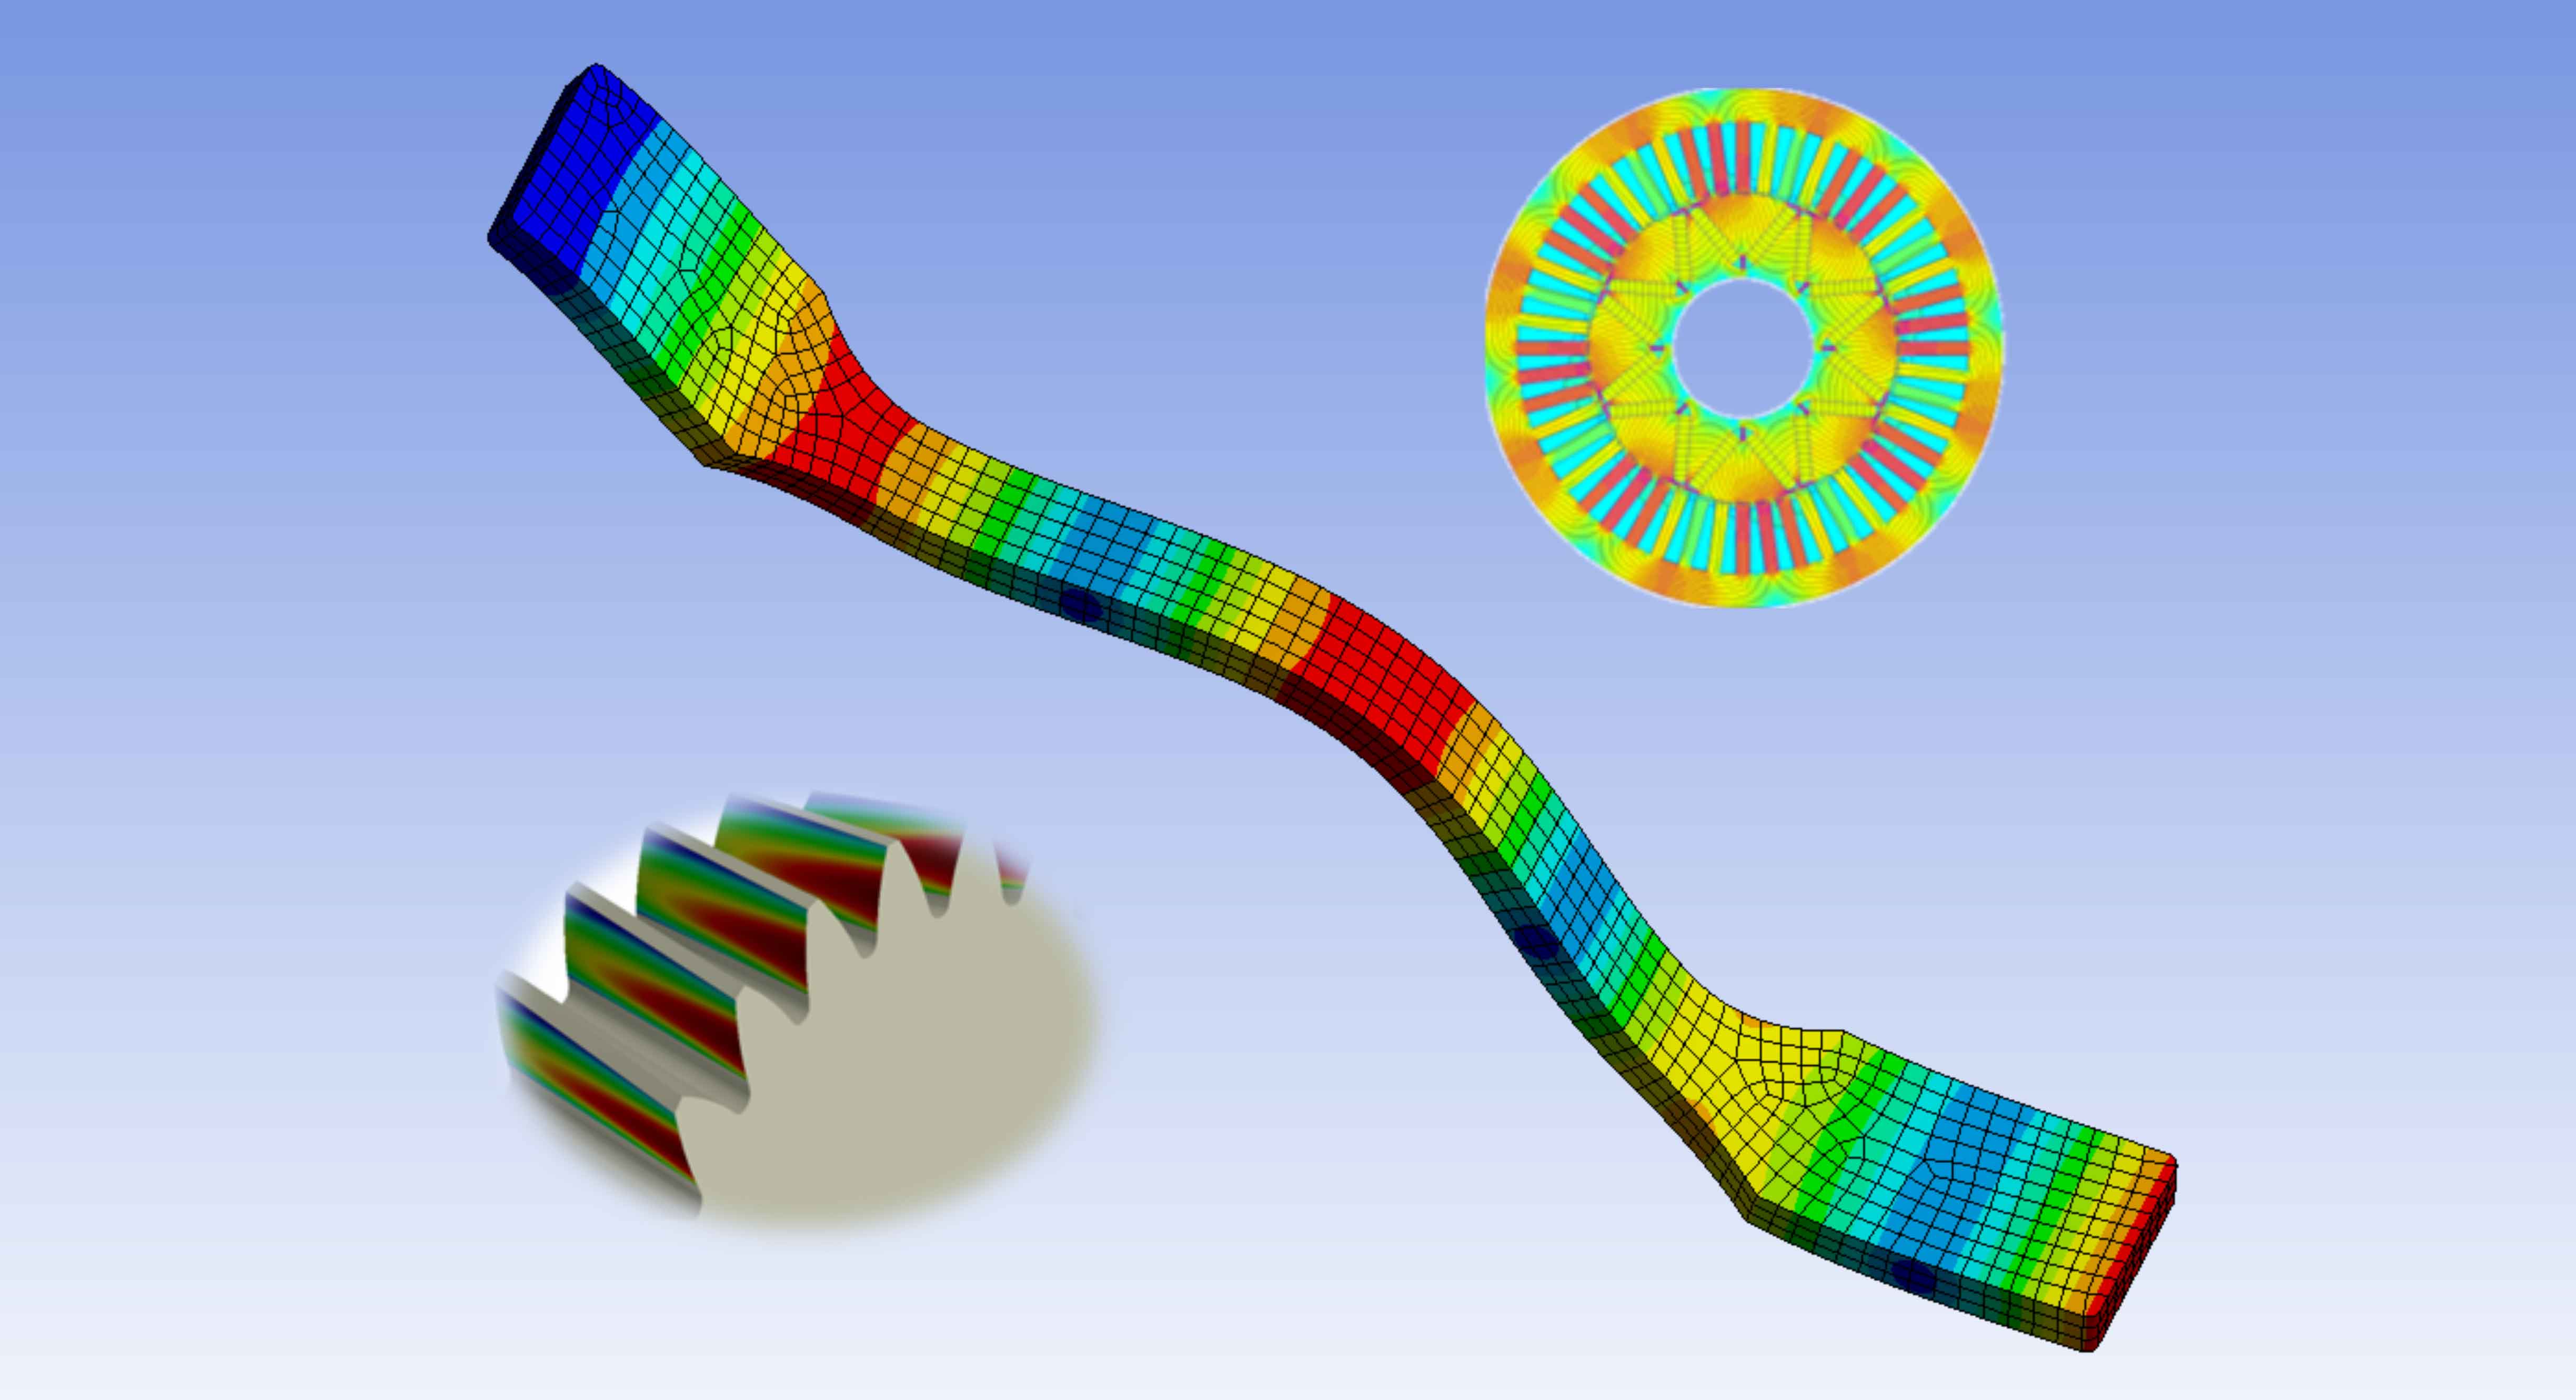 FEM simulation of structure-borne noise